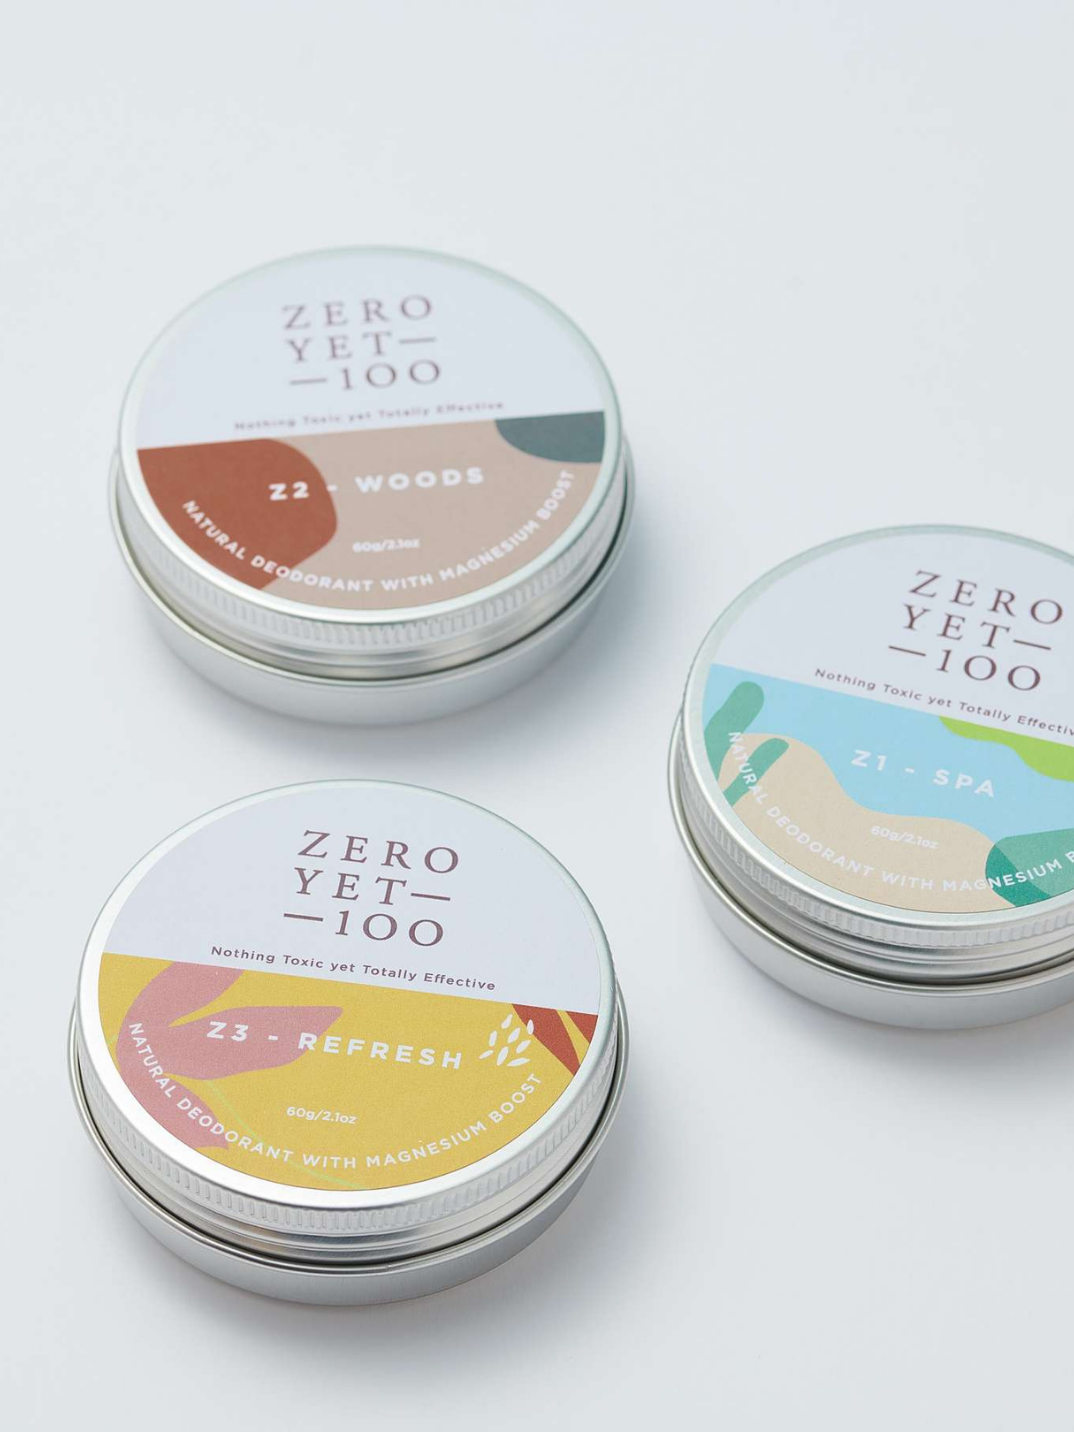 Z1 spa deodorant pot Zero Yet 100 plastic-free packaging